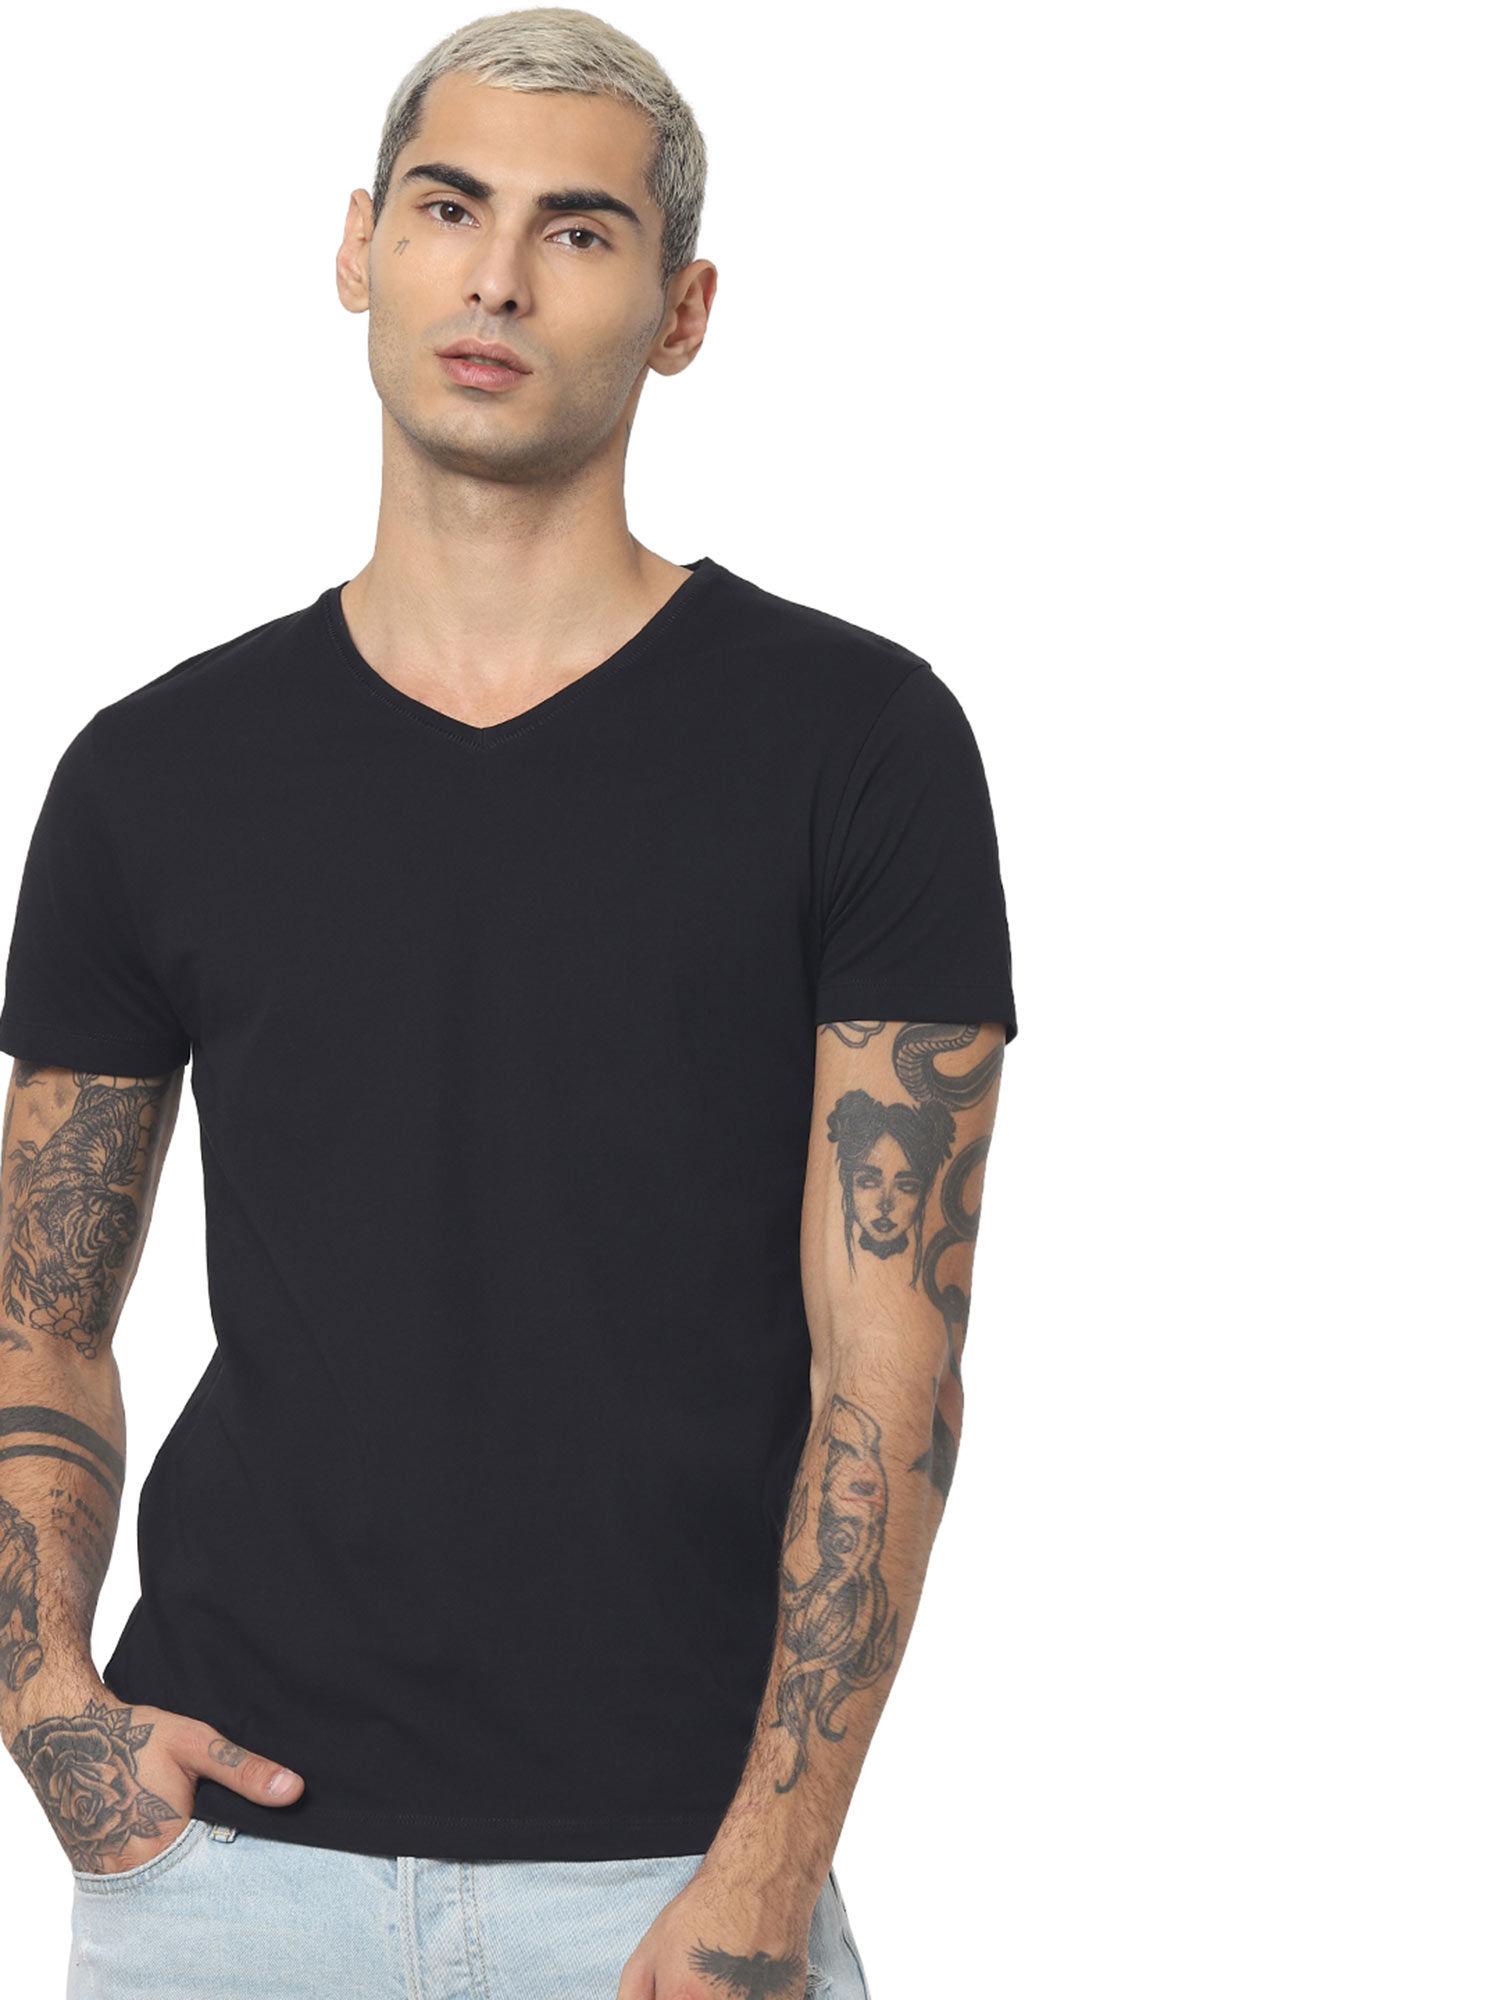 black v-neck t-shirt